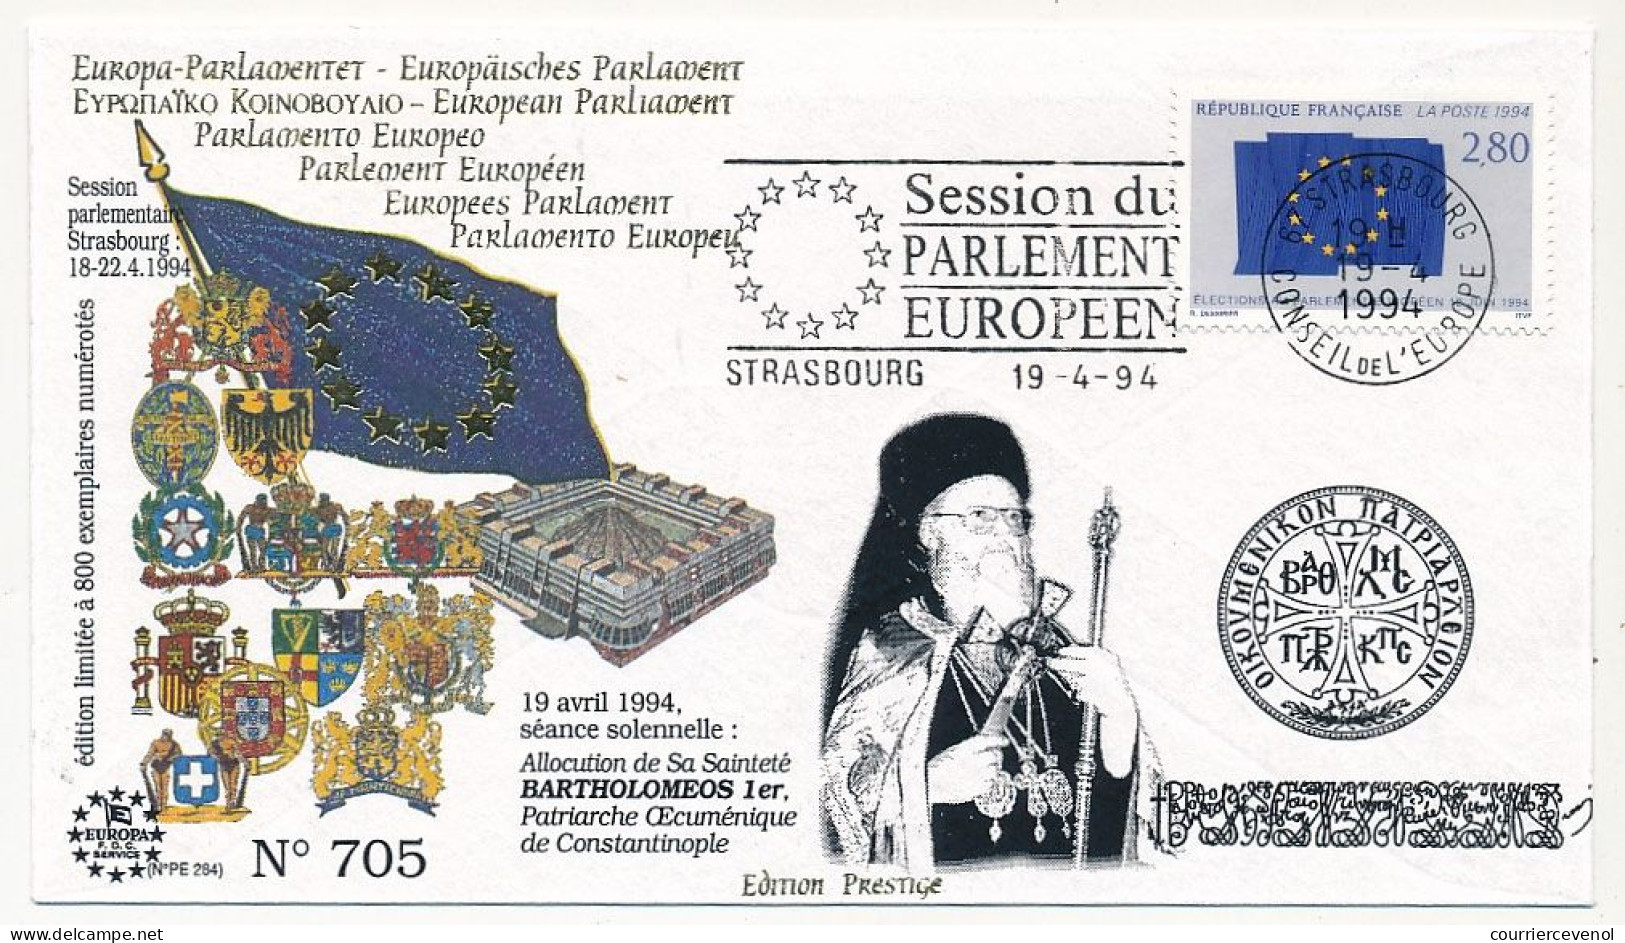 FRANCE - Env 2,80 Elections OMEC Strasbourg Session Parlement Européen 19/04/1994 - Patriarche Bartholomeos 1er - Covers & Documents